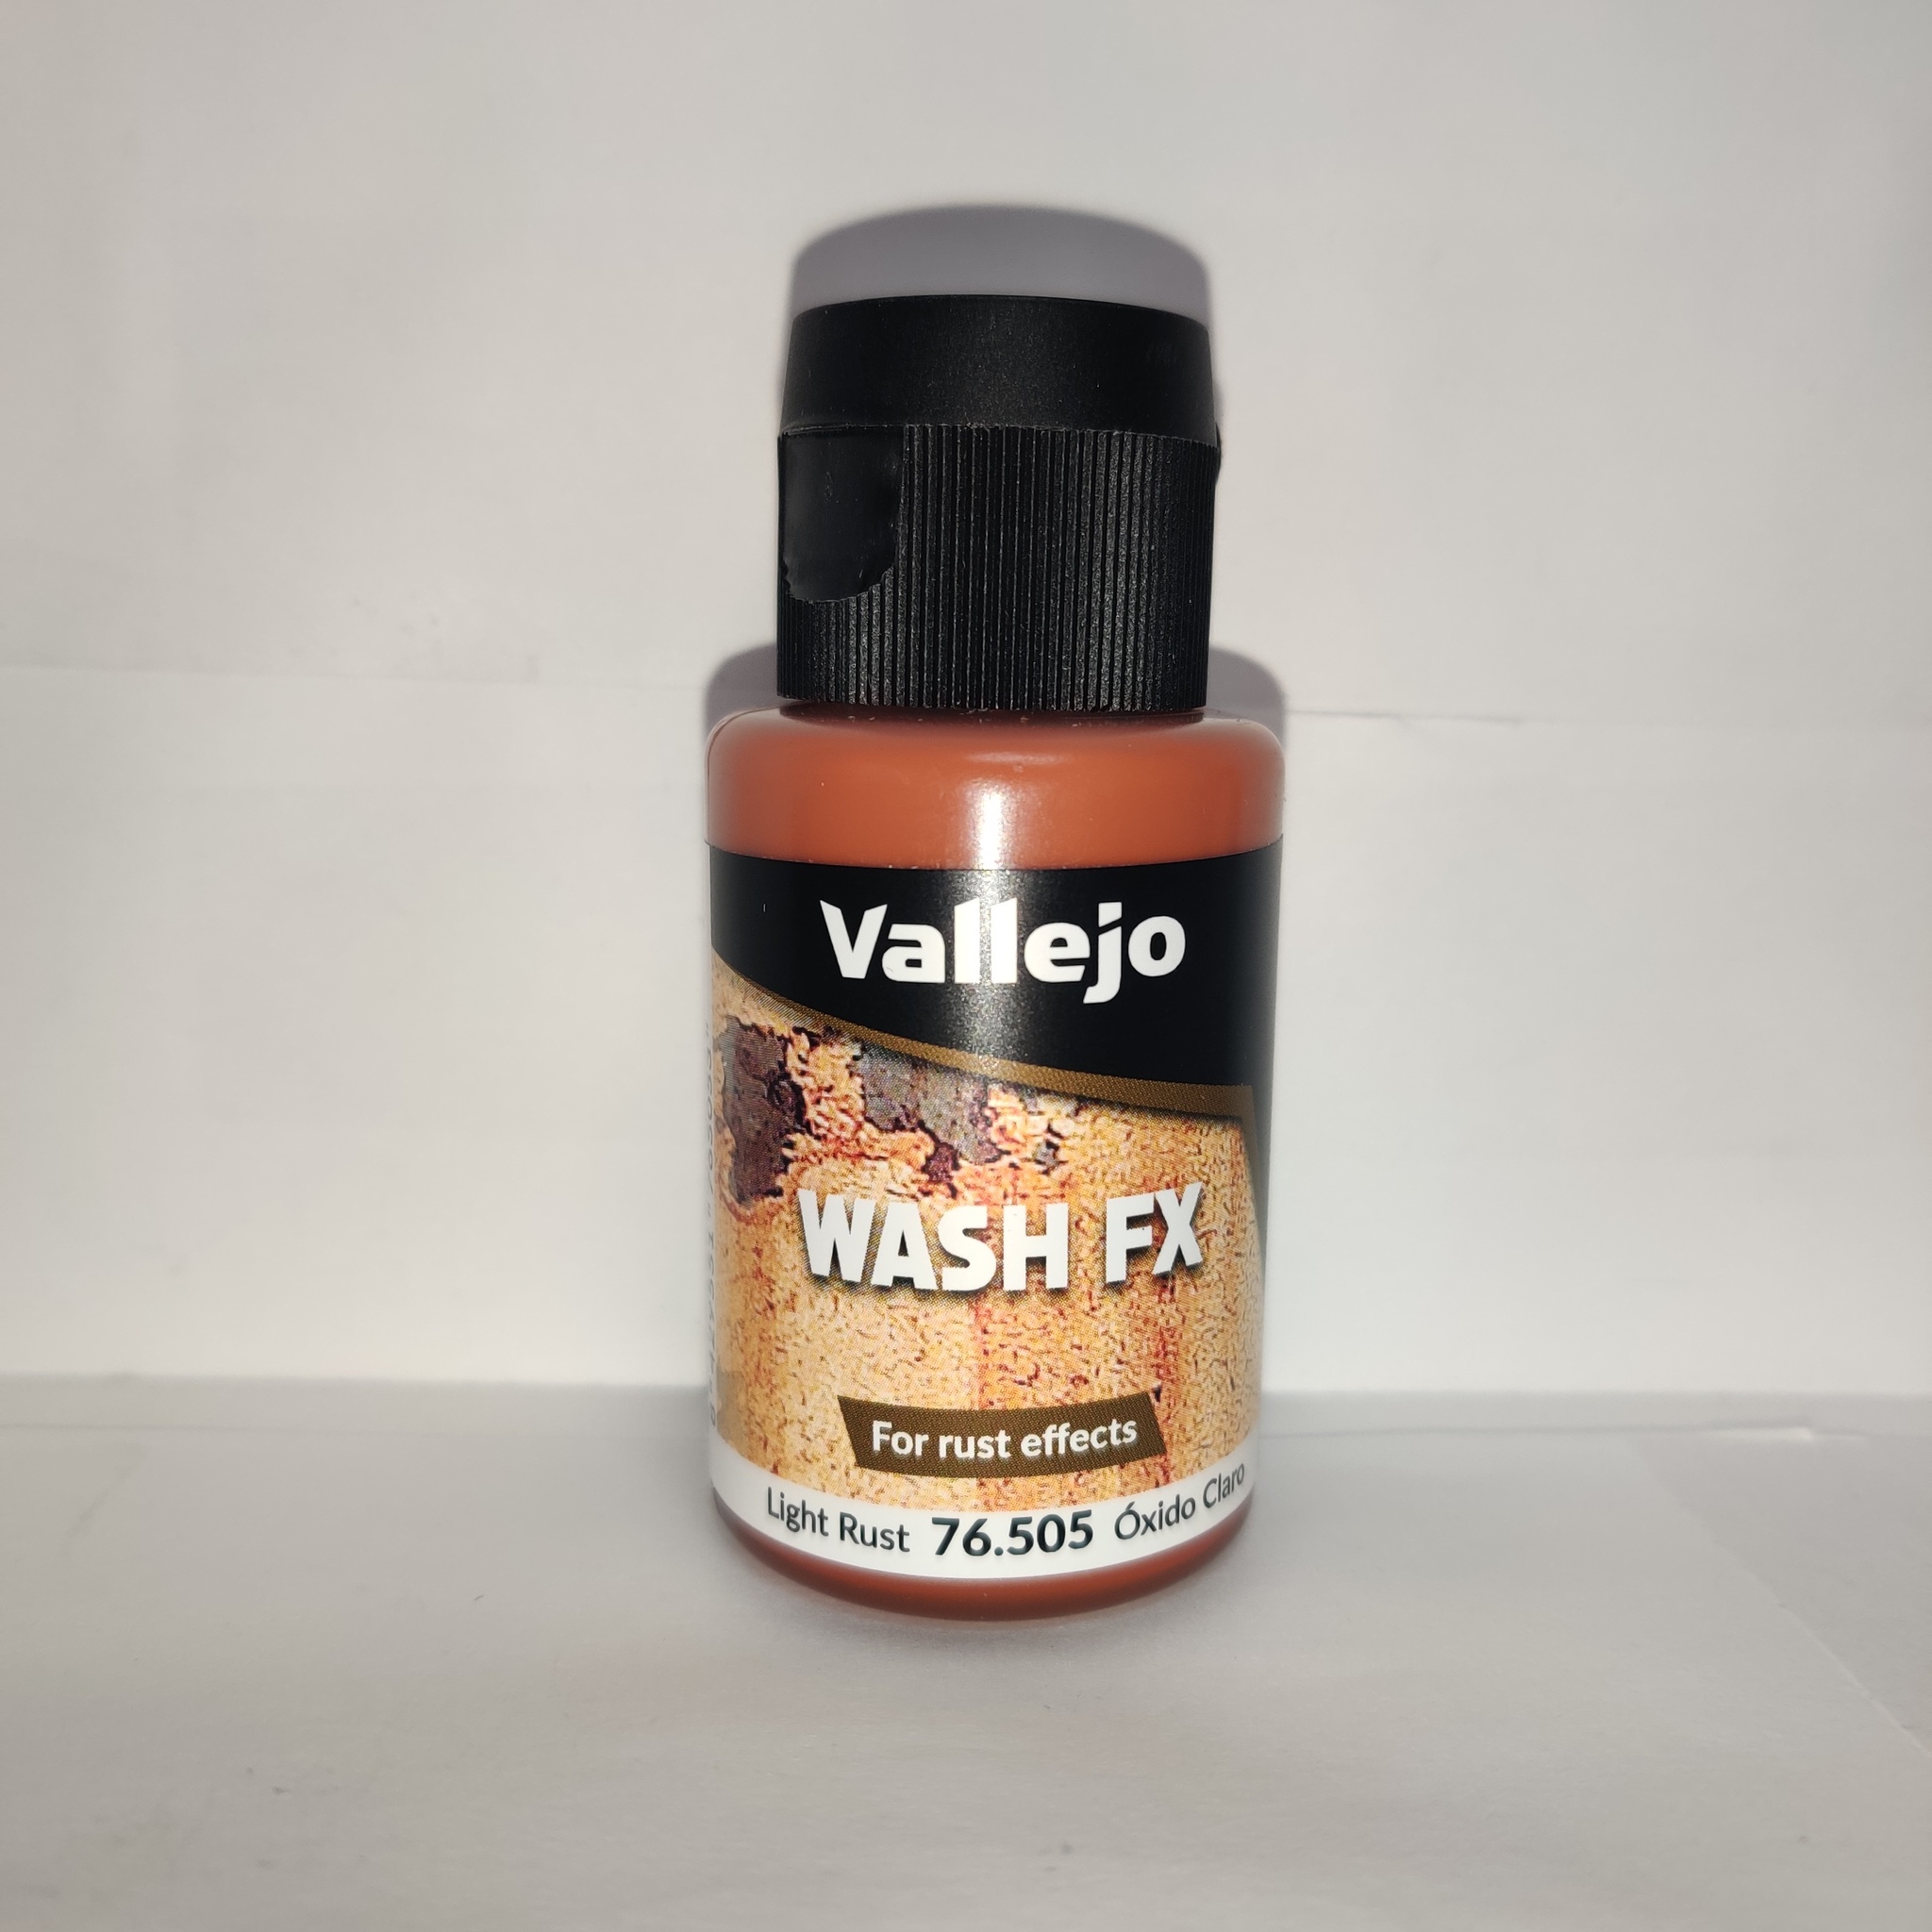 Vallejo Wash FX 35ml Light Rust for rust effect, 76505